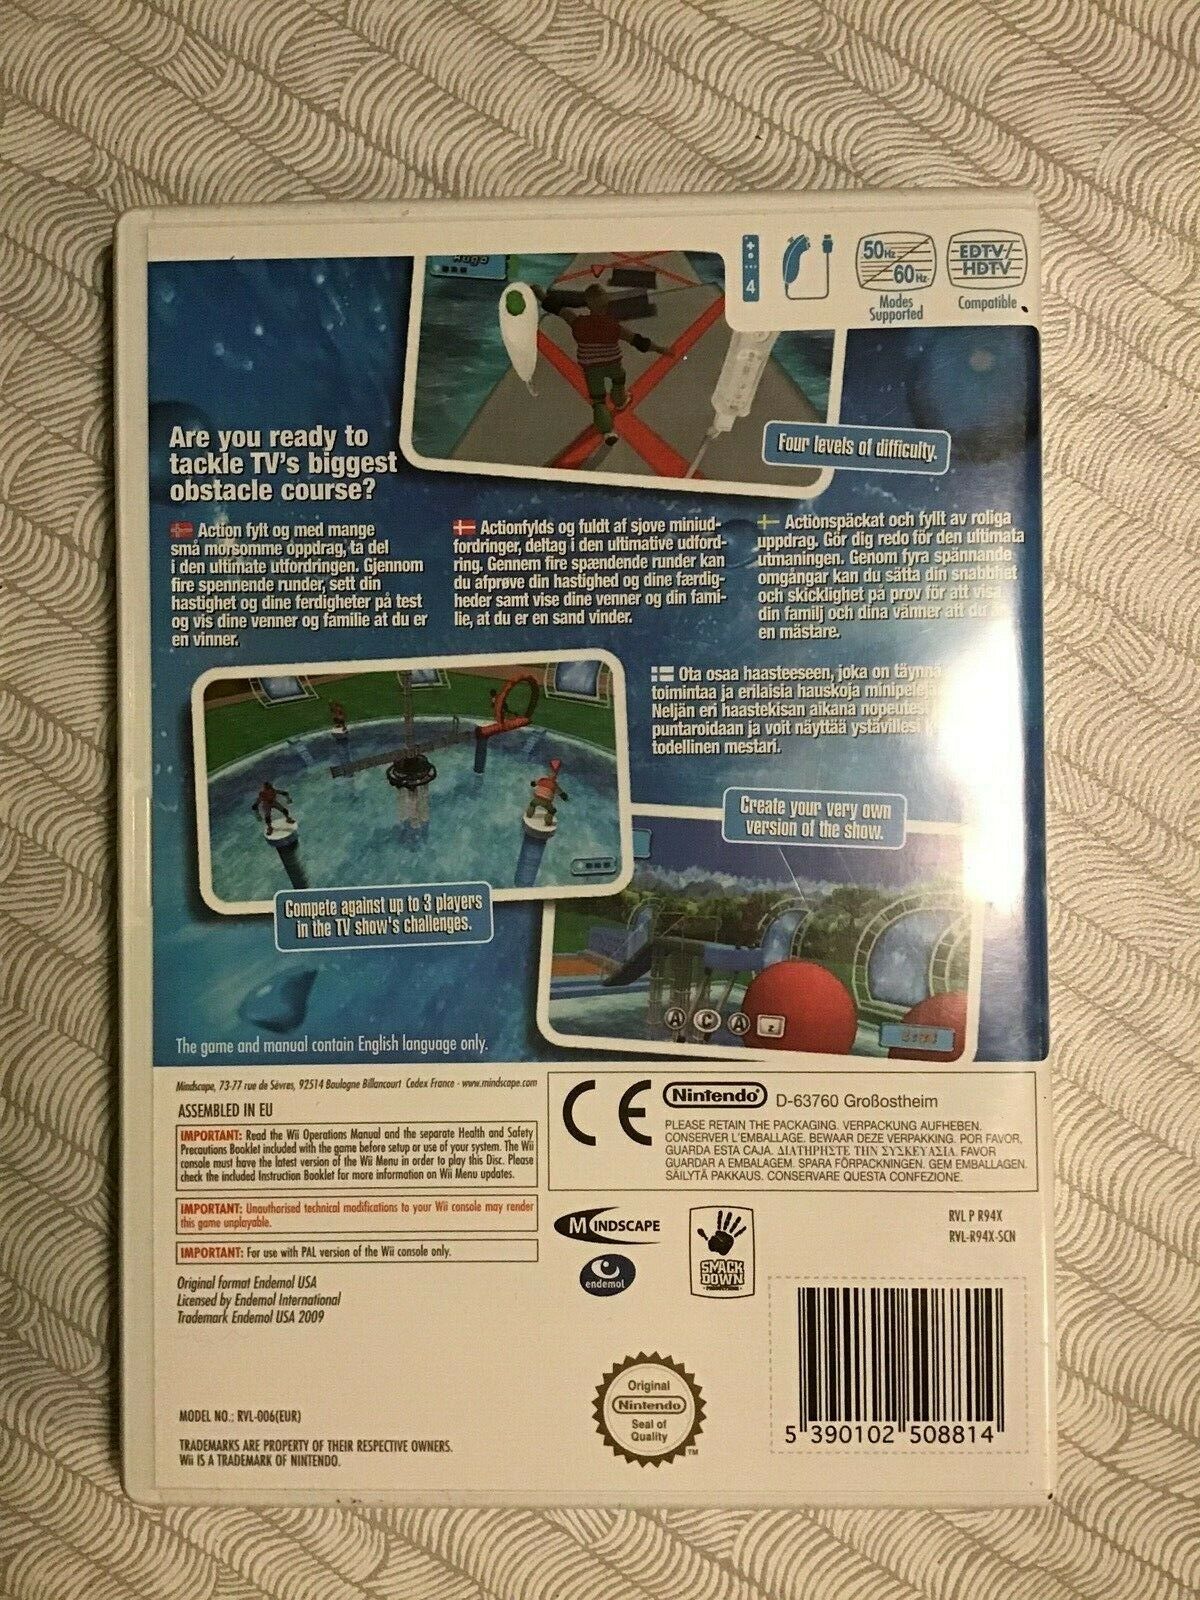 10 minute solution, Nintendo Wii, sport